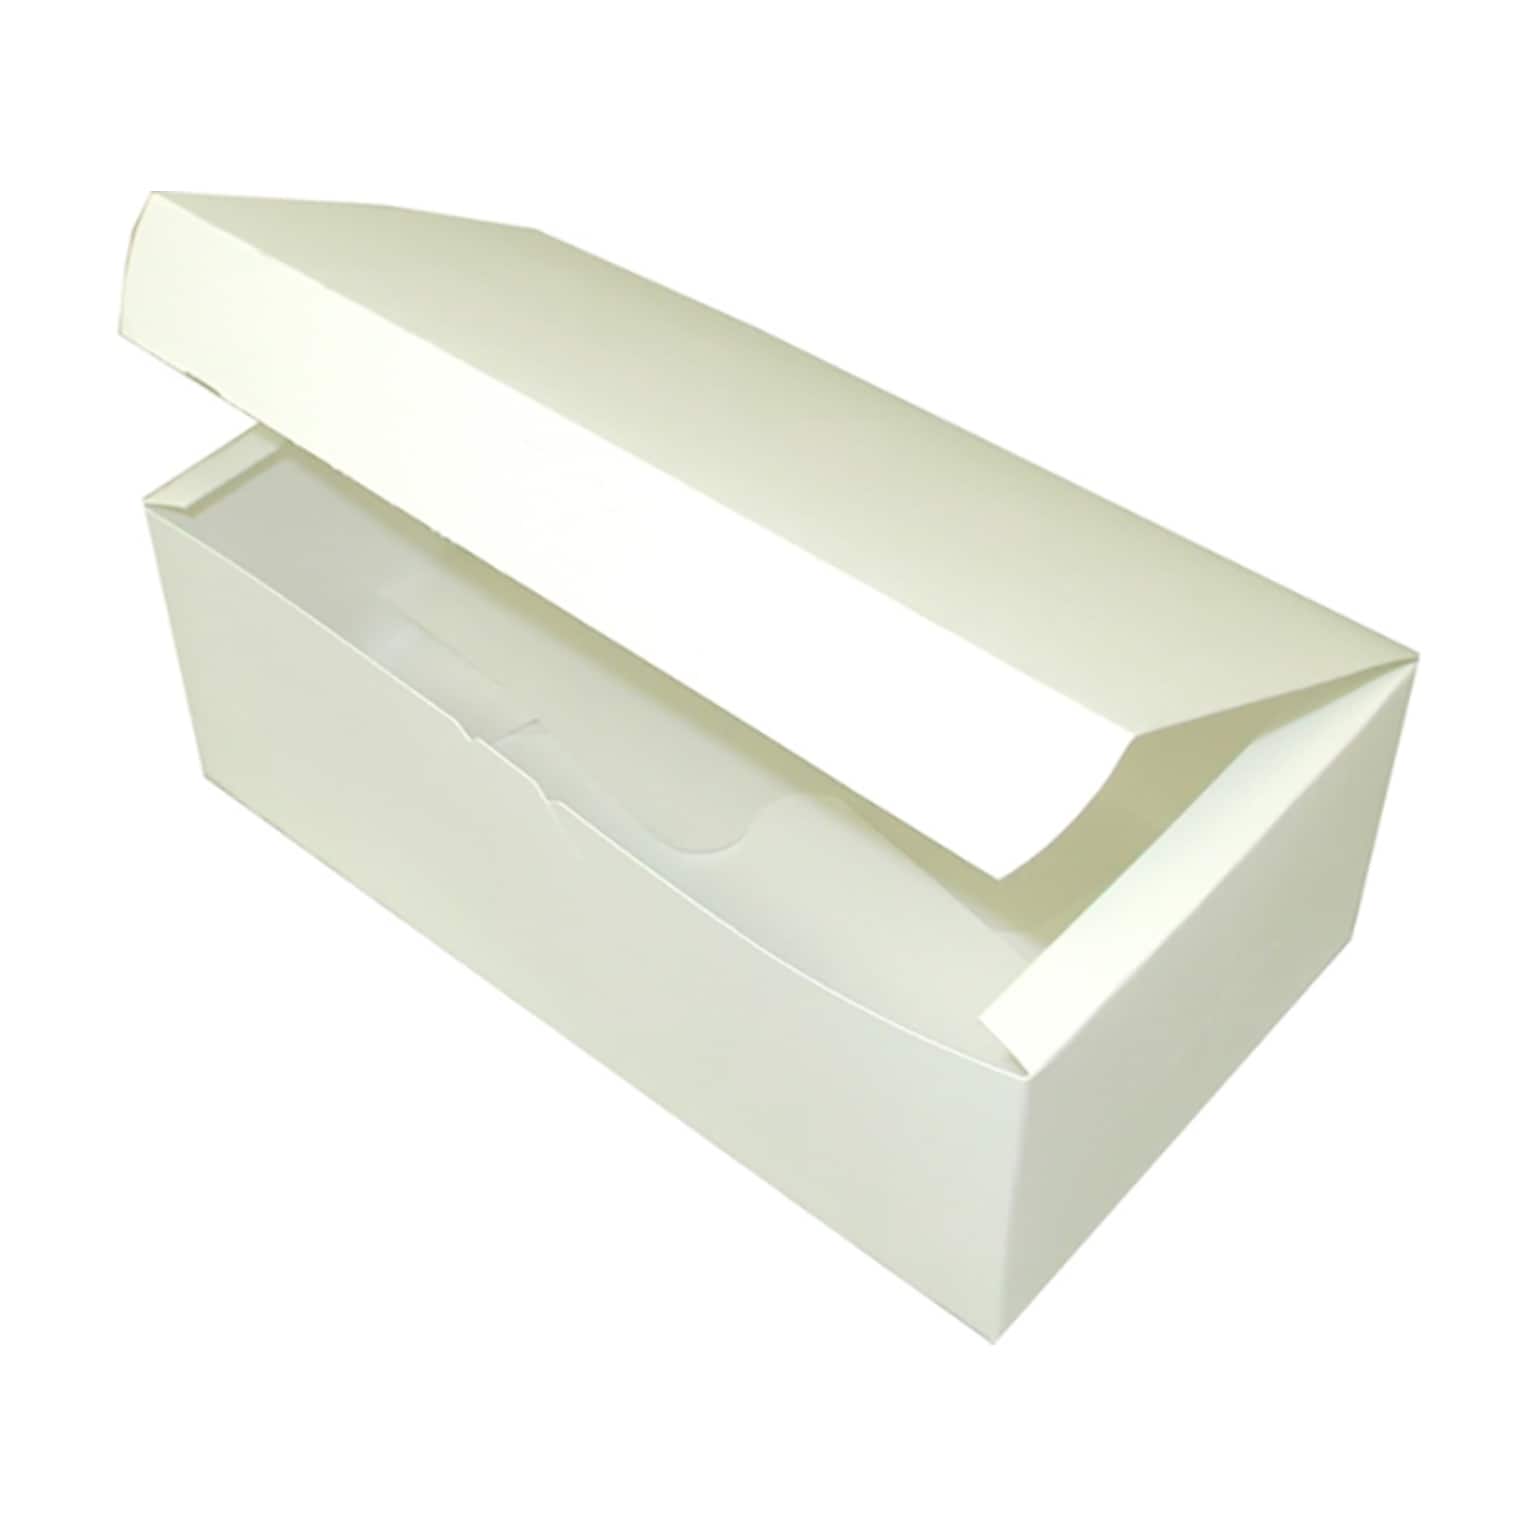 Dixie Paperboard Food Takeout Box, 2.75 x 7 x 4.25, White, 300/Carton